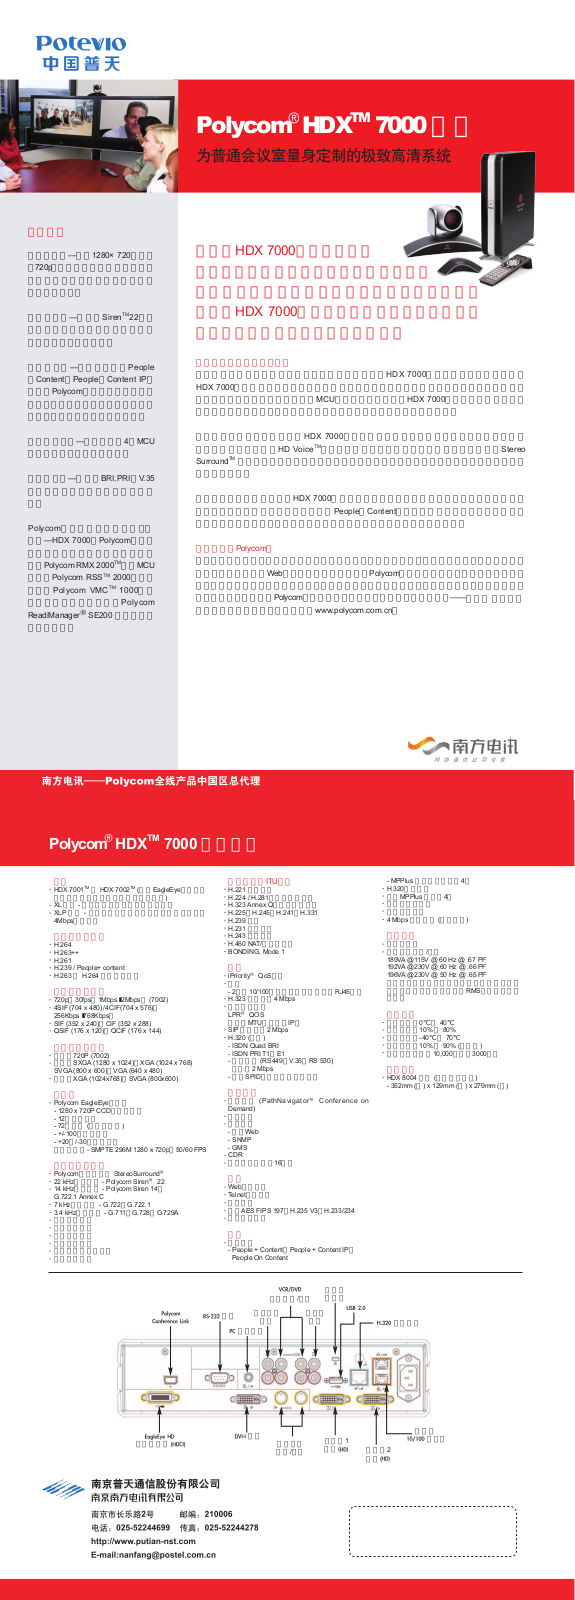 Polycom HDX 7000 User Manual